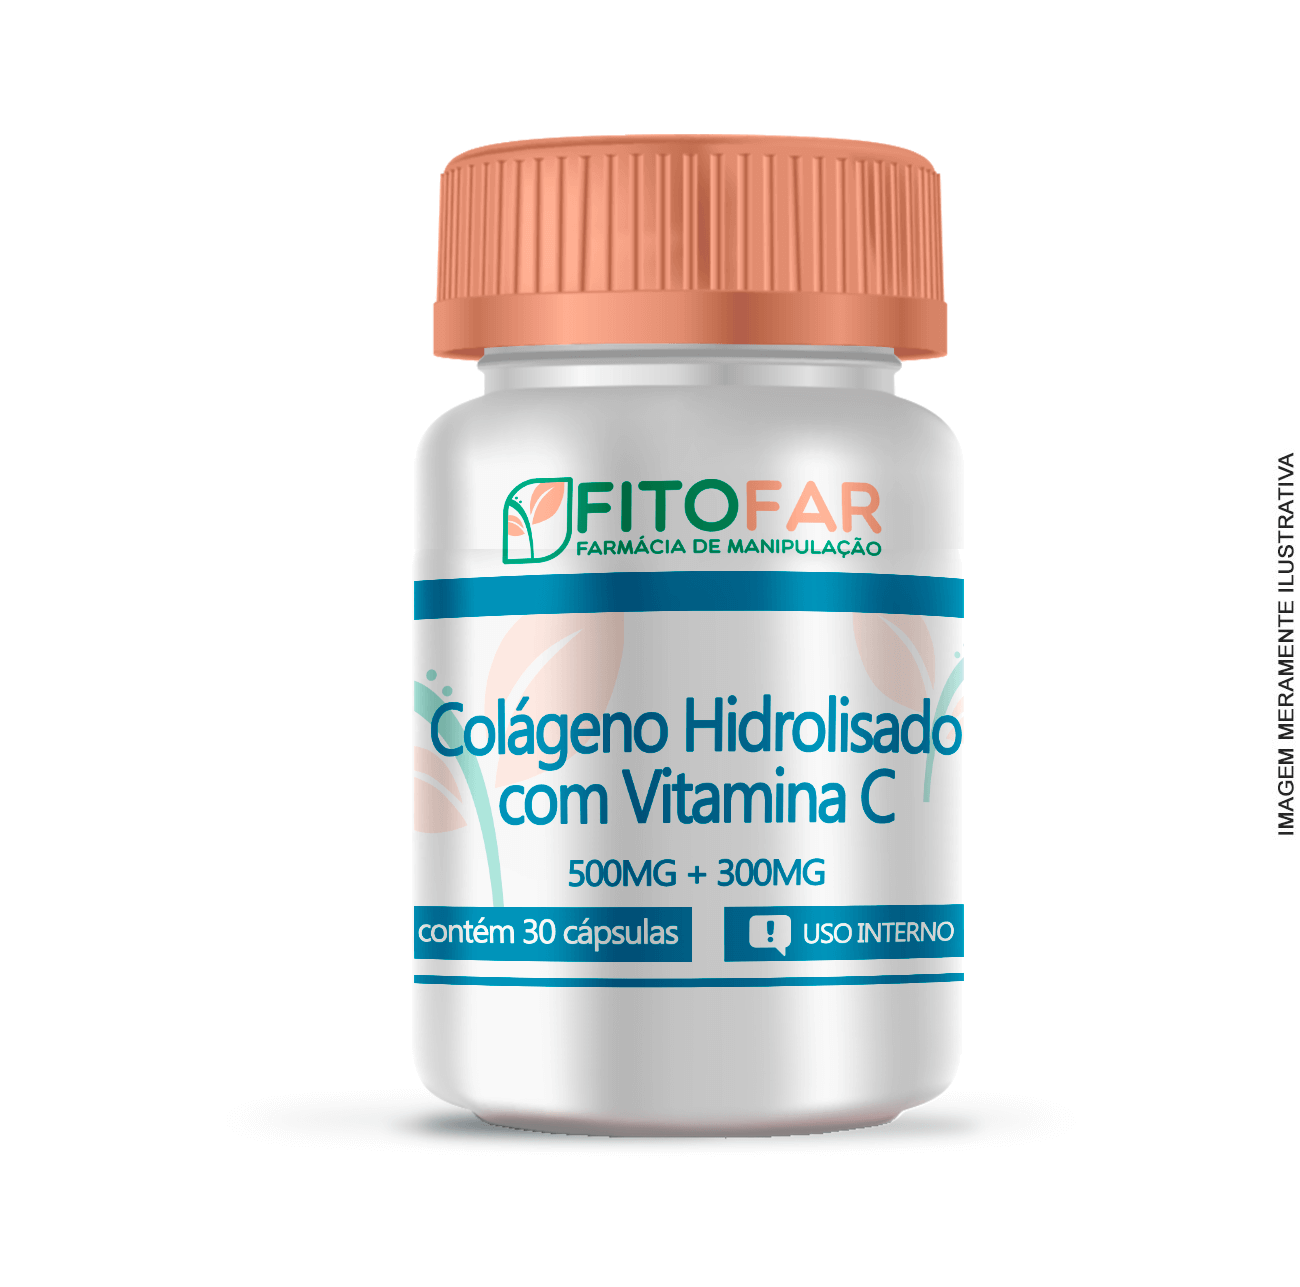 Colágeno Hidrolisado com Vitamina C  500MG + 300MG - 30 Cápsulas